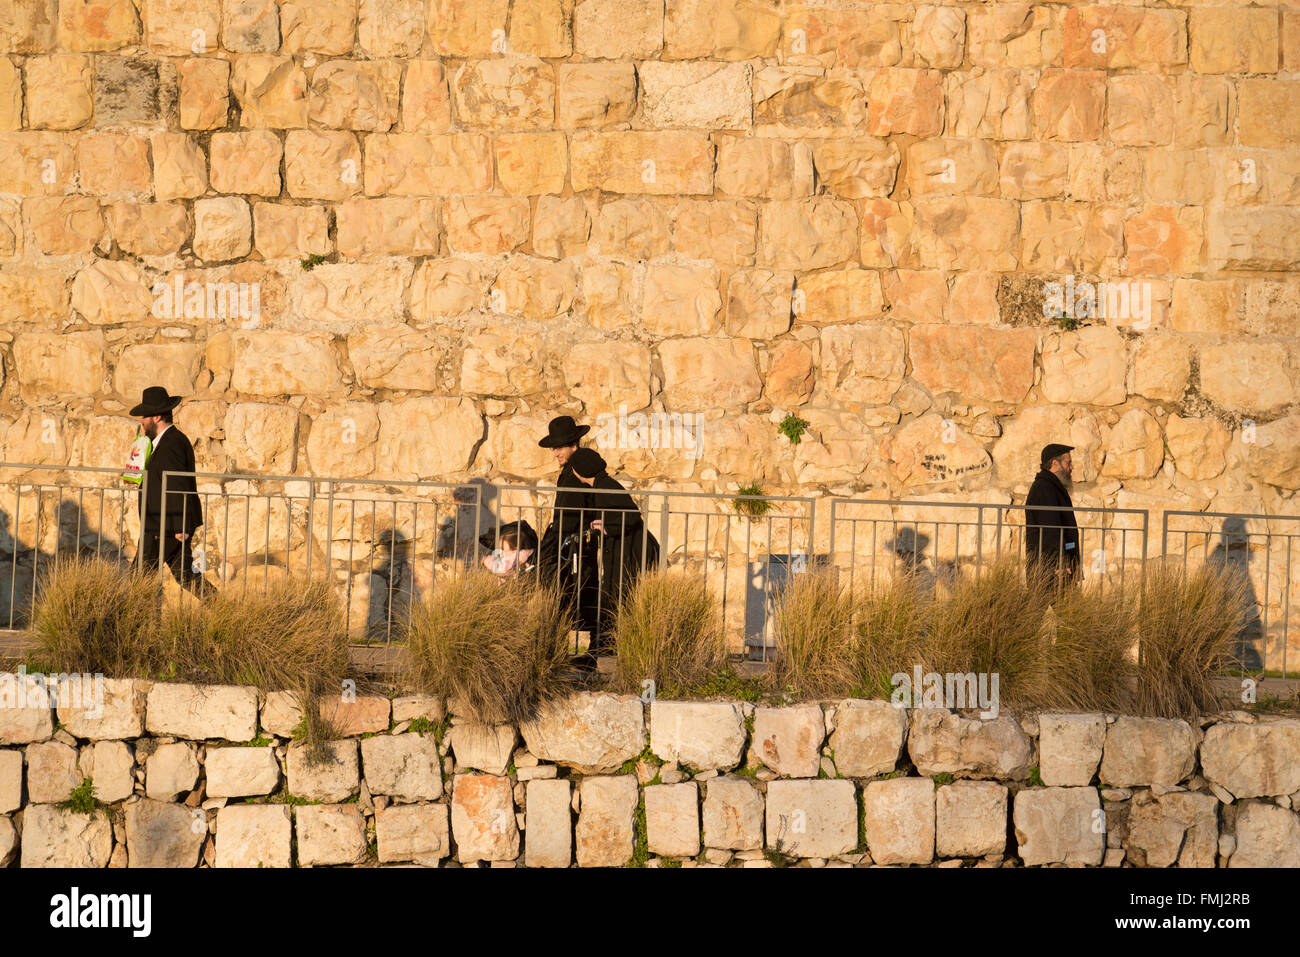 Jews walking along the Old City walls. Jerusalem Old City. Israel. Stock Photo